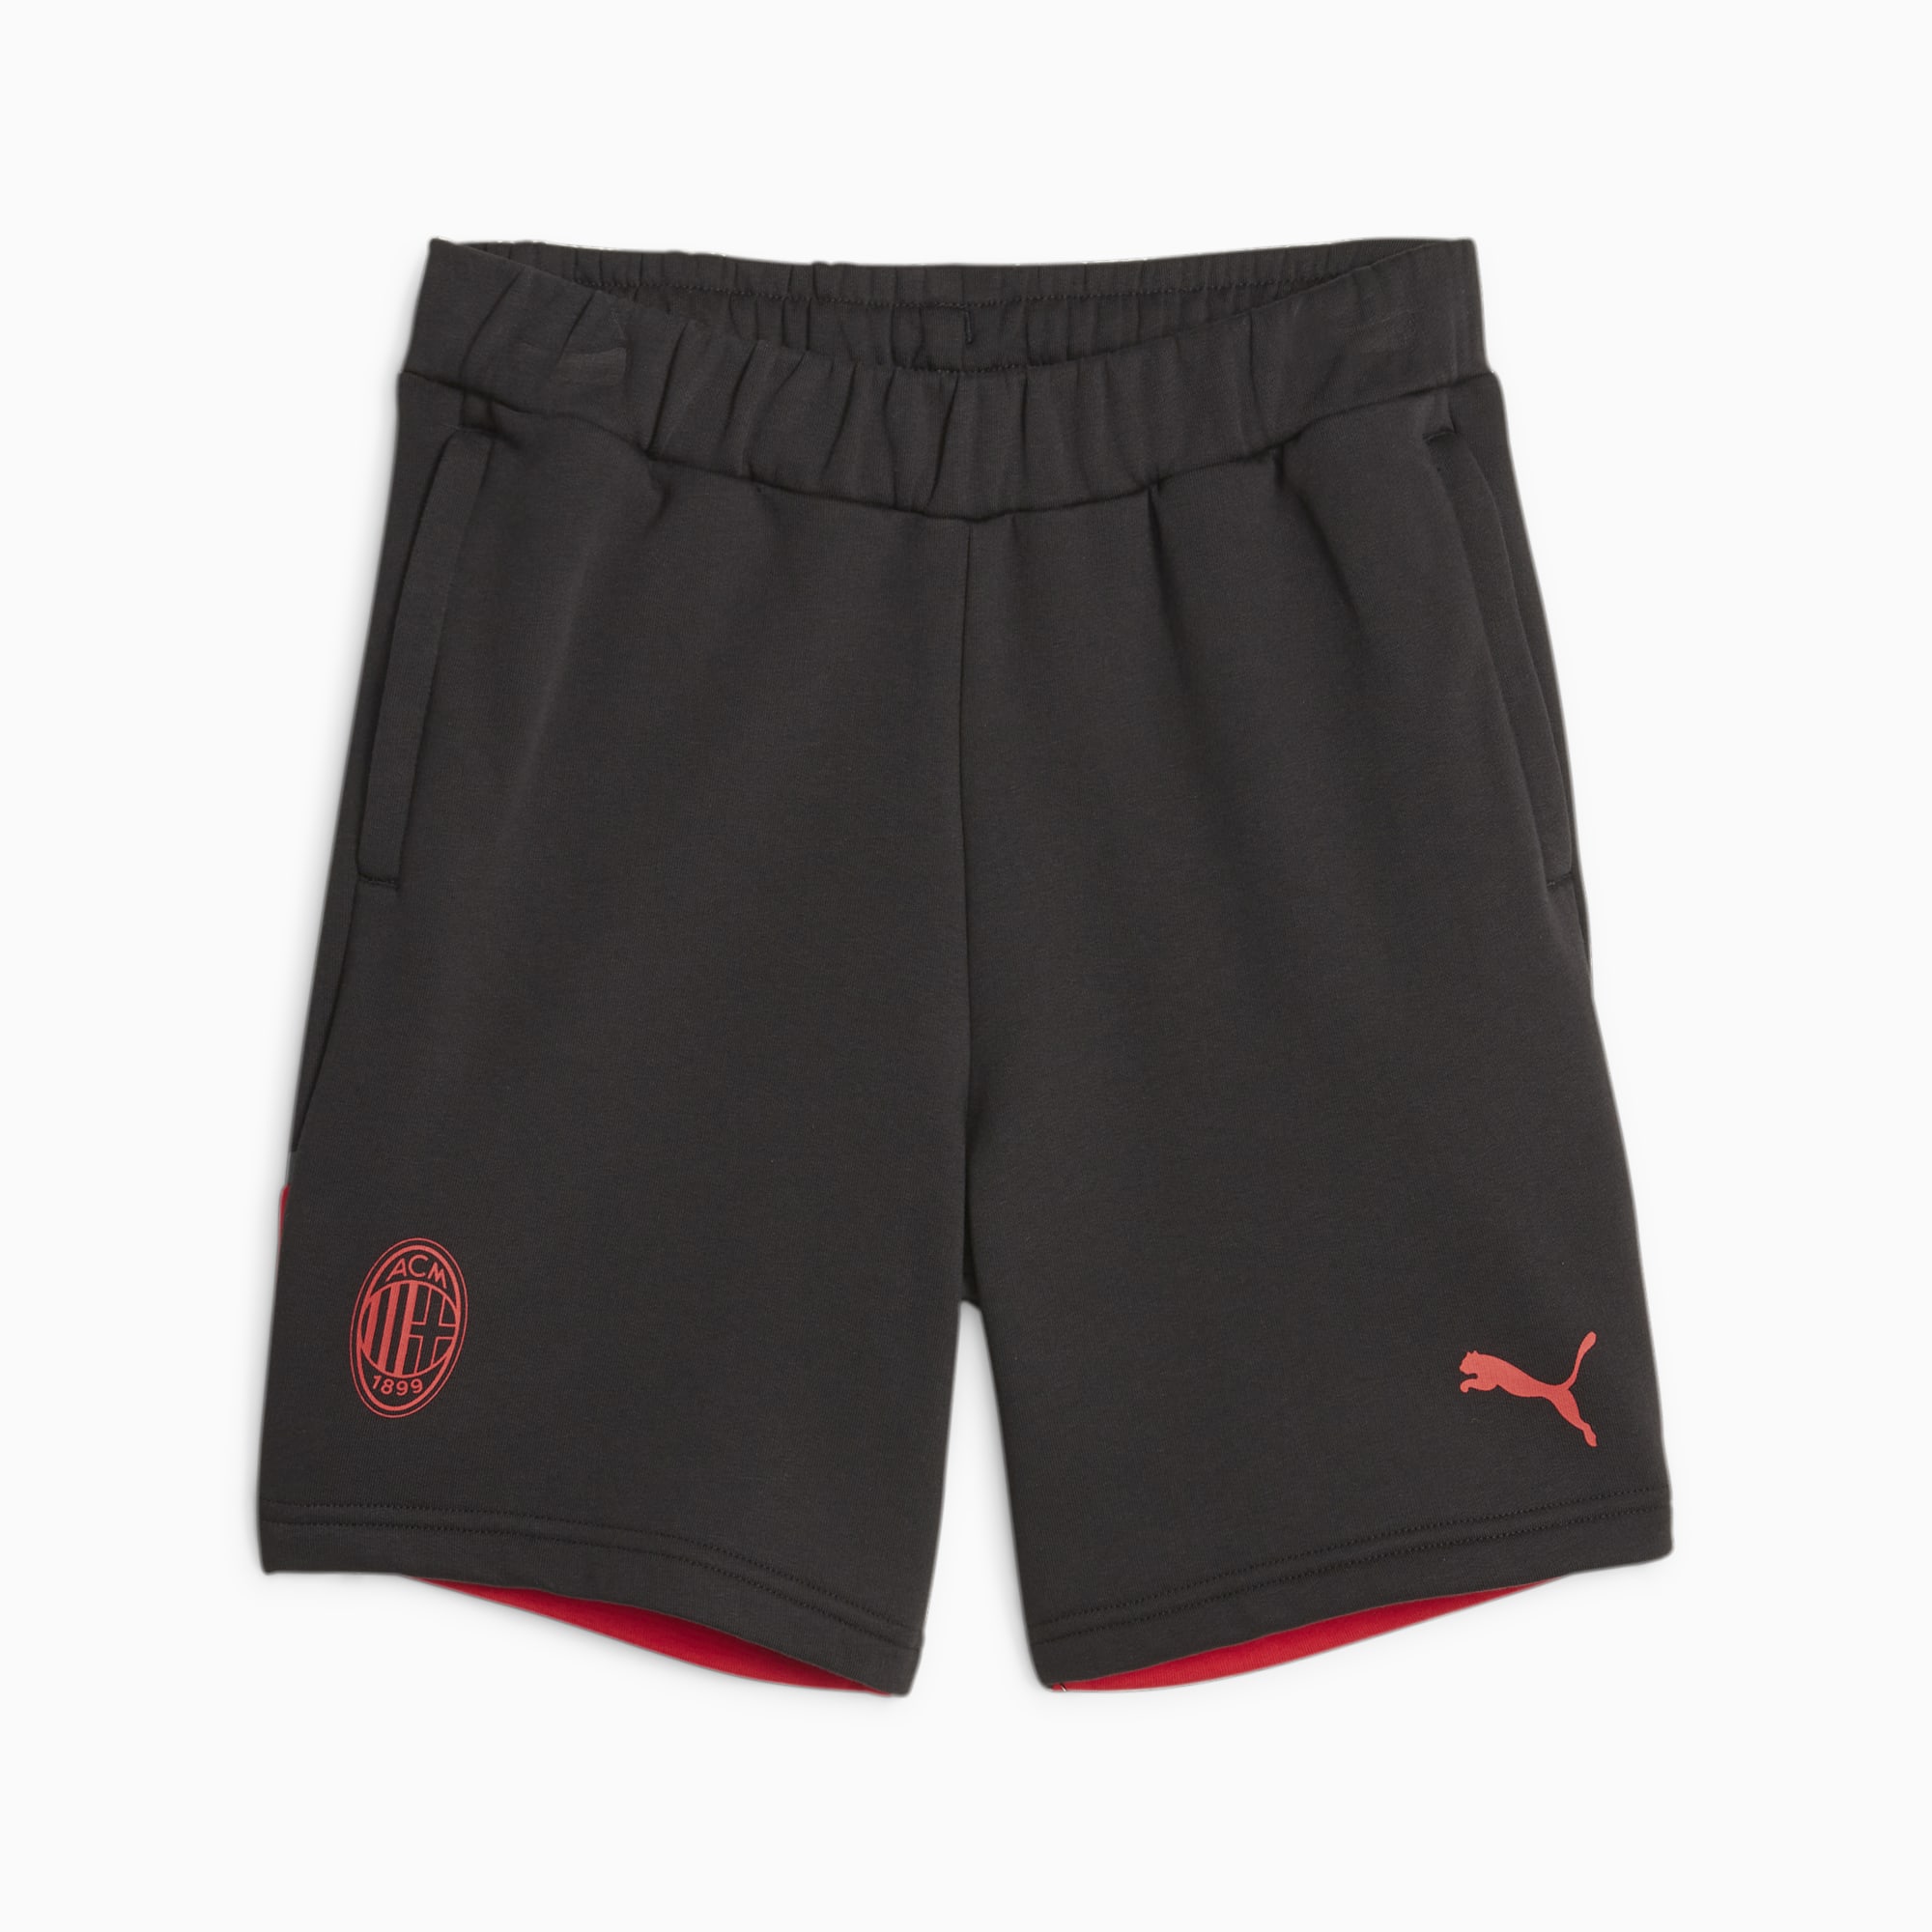 PUMA Shorts De Fútbol Juveniles AC Milan Casuals, Rojo/Negro